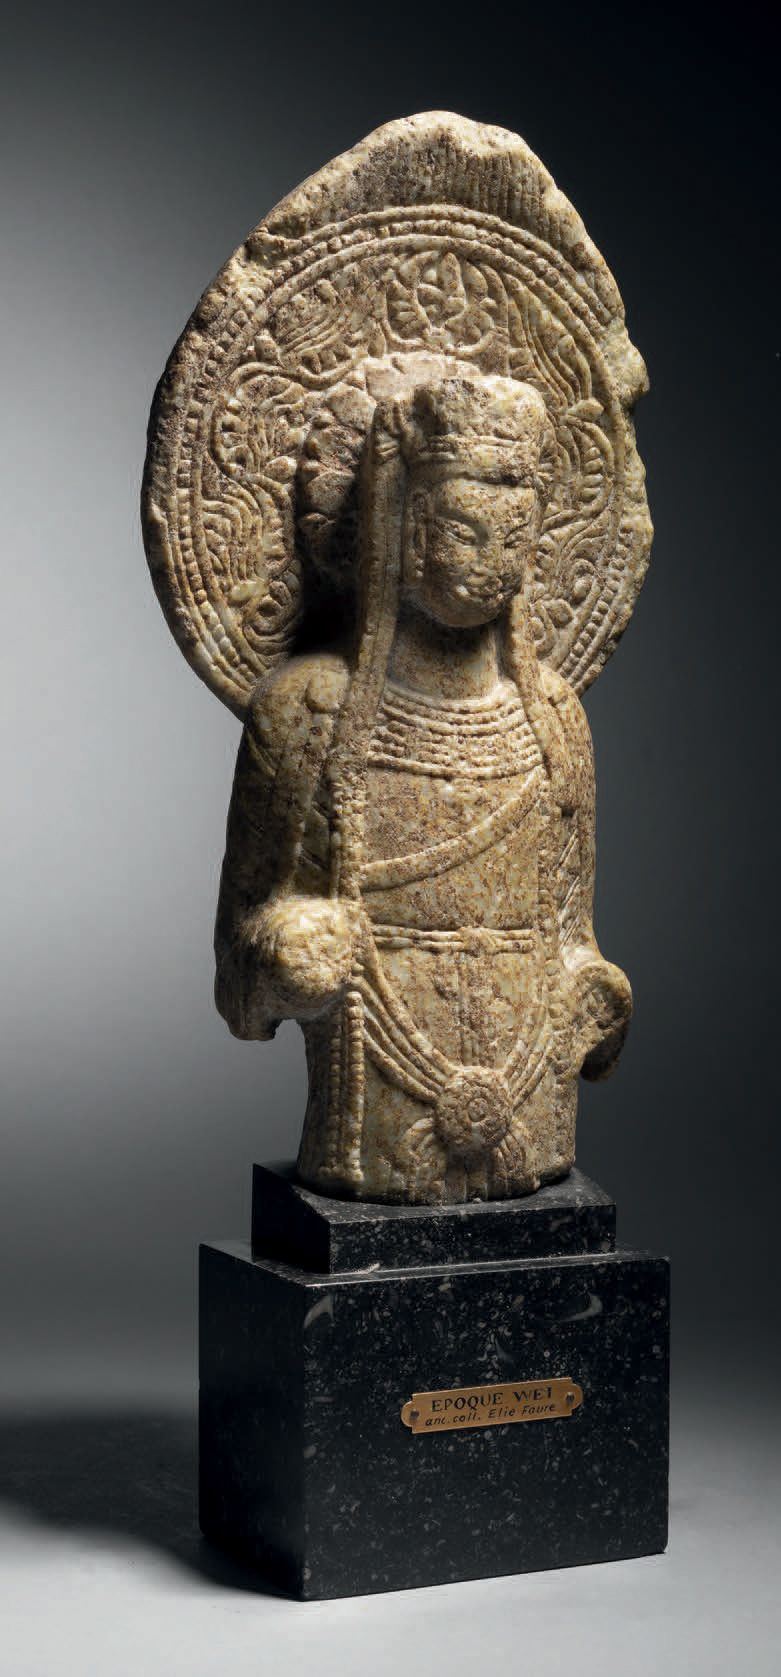 Null 菩萨半身像，中国，东魏（534-650）。
H.26.5厘米。黄色大理石
菩萨的装饰很丰富，戴着几条项链，一条腰带和一个头饰，头顶两侧有丝带垂下。他头&hellip;